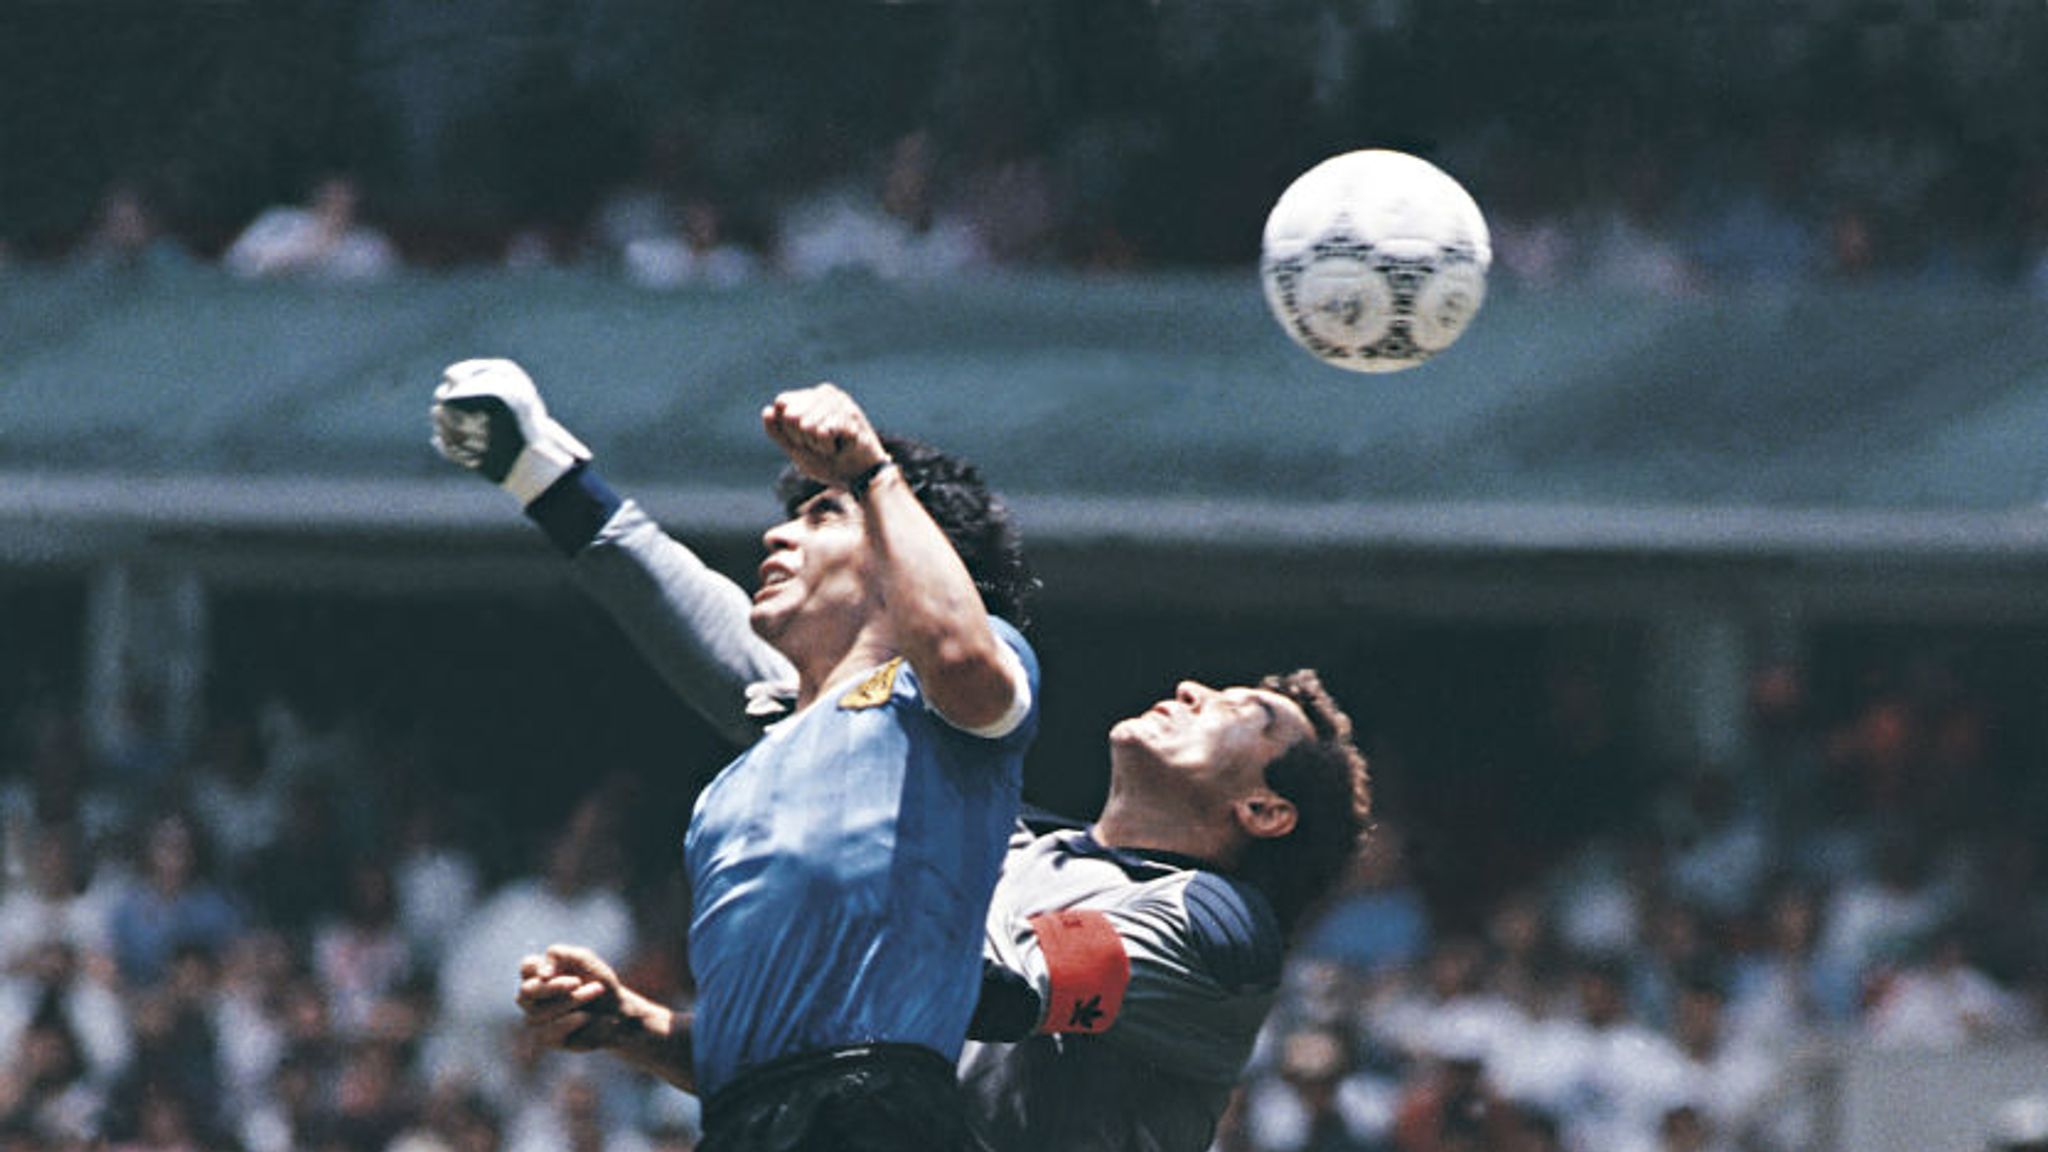 Diego Maradona one of the greatest but Hand of God goal left sour taste, says Peter Shilton